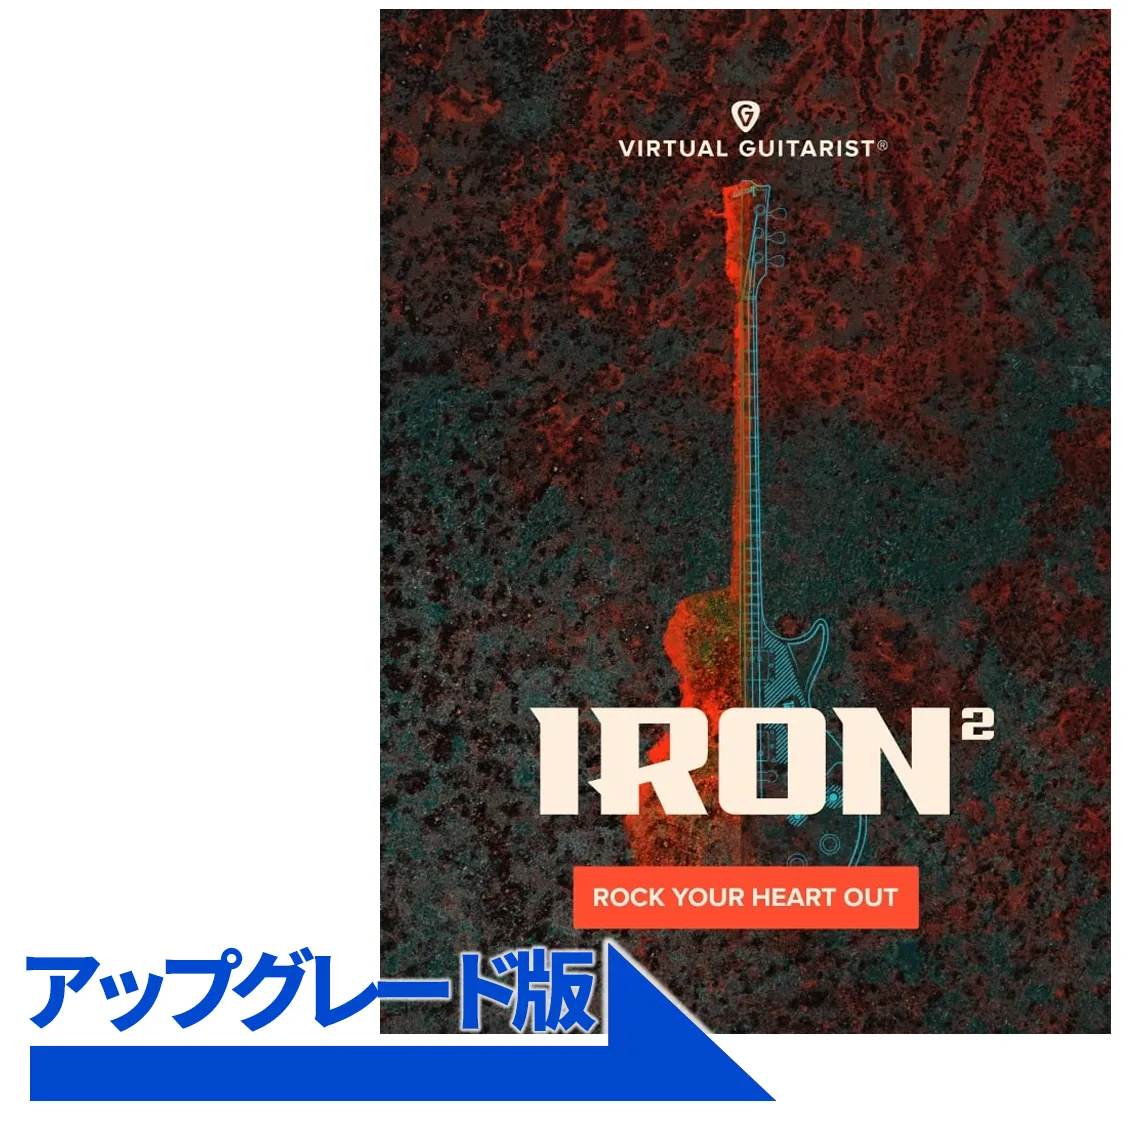 Virtual Guitarist Iron 2 アップグレード from IRON